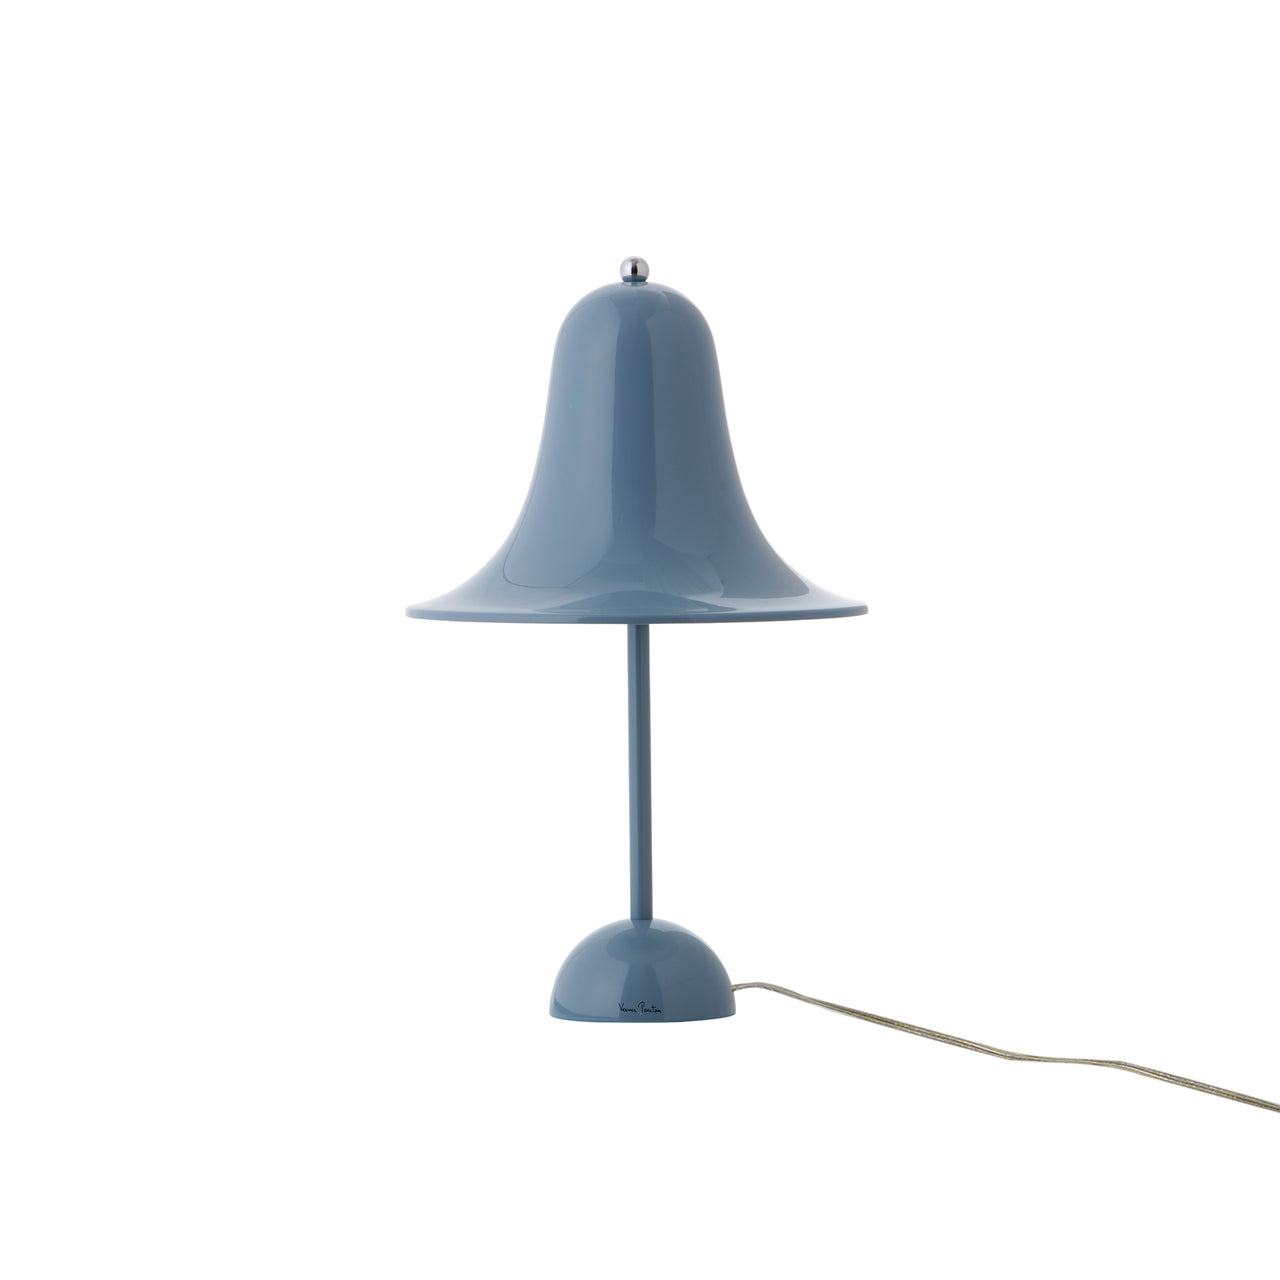 Pantop Table Lamp: Dusty Blue